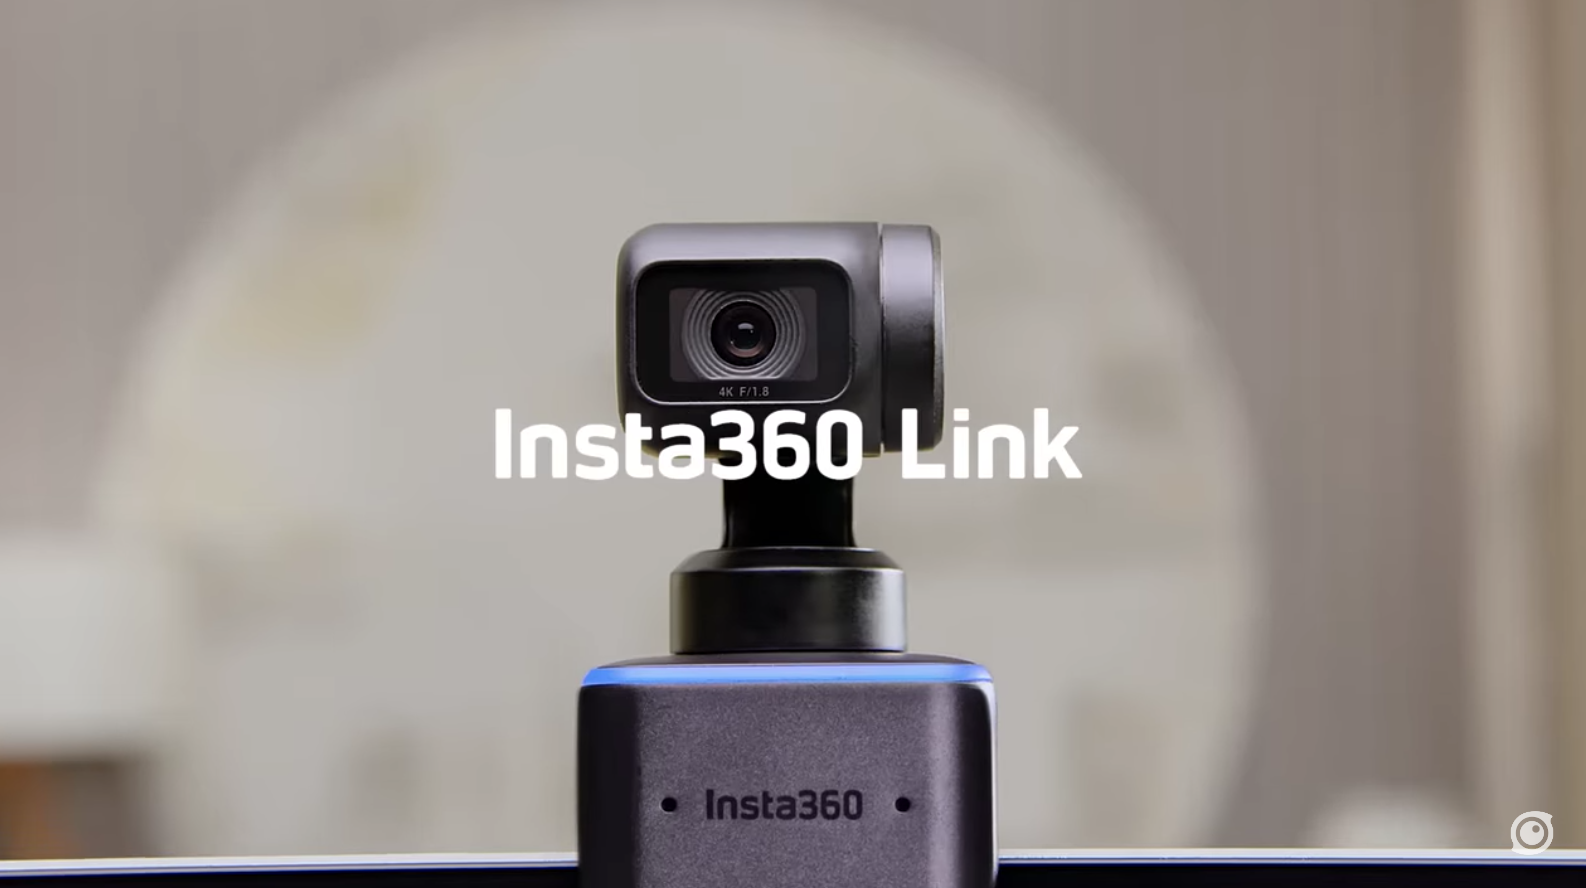 Insta360 Link: The Powerful 4K - Using Redefine Work Remote Webcam to SnowBrains AI